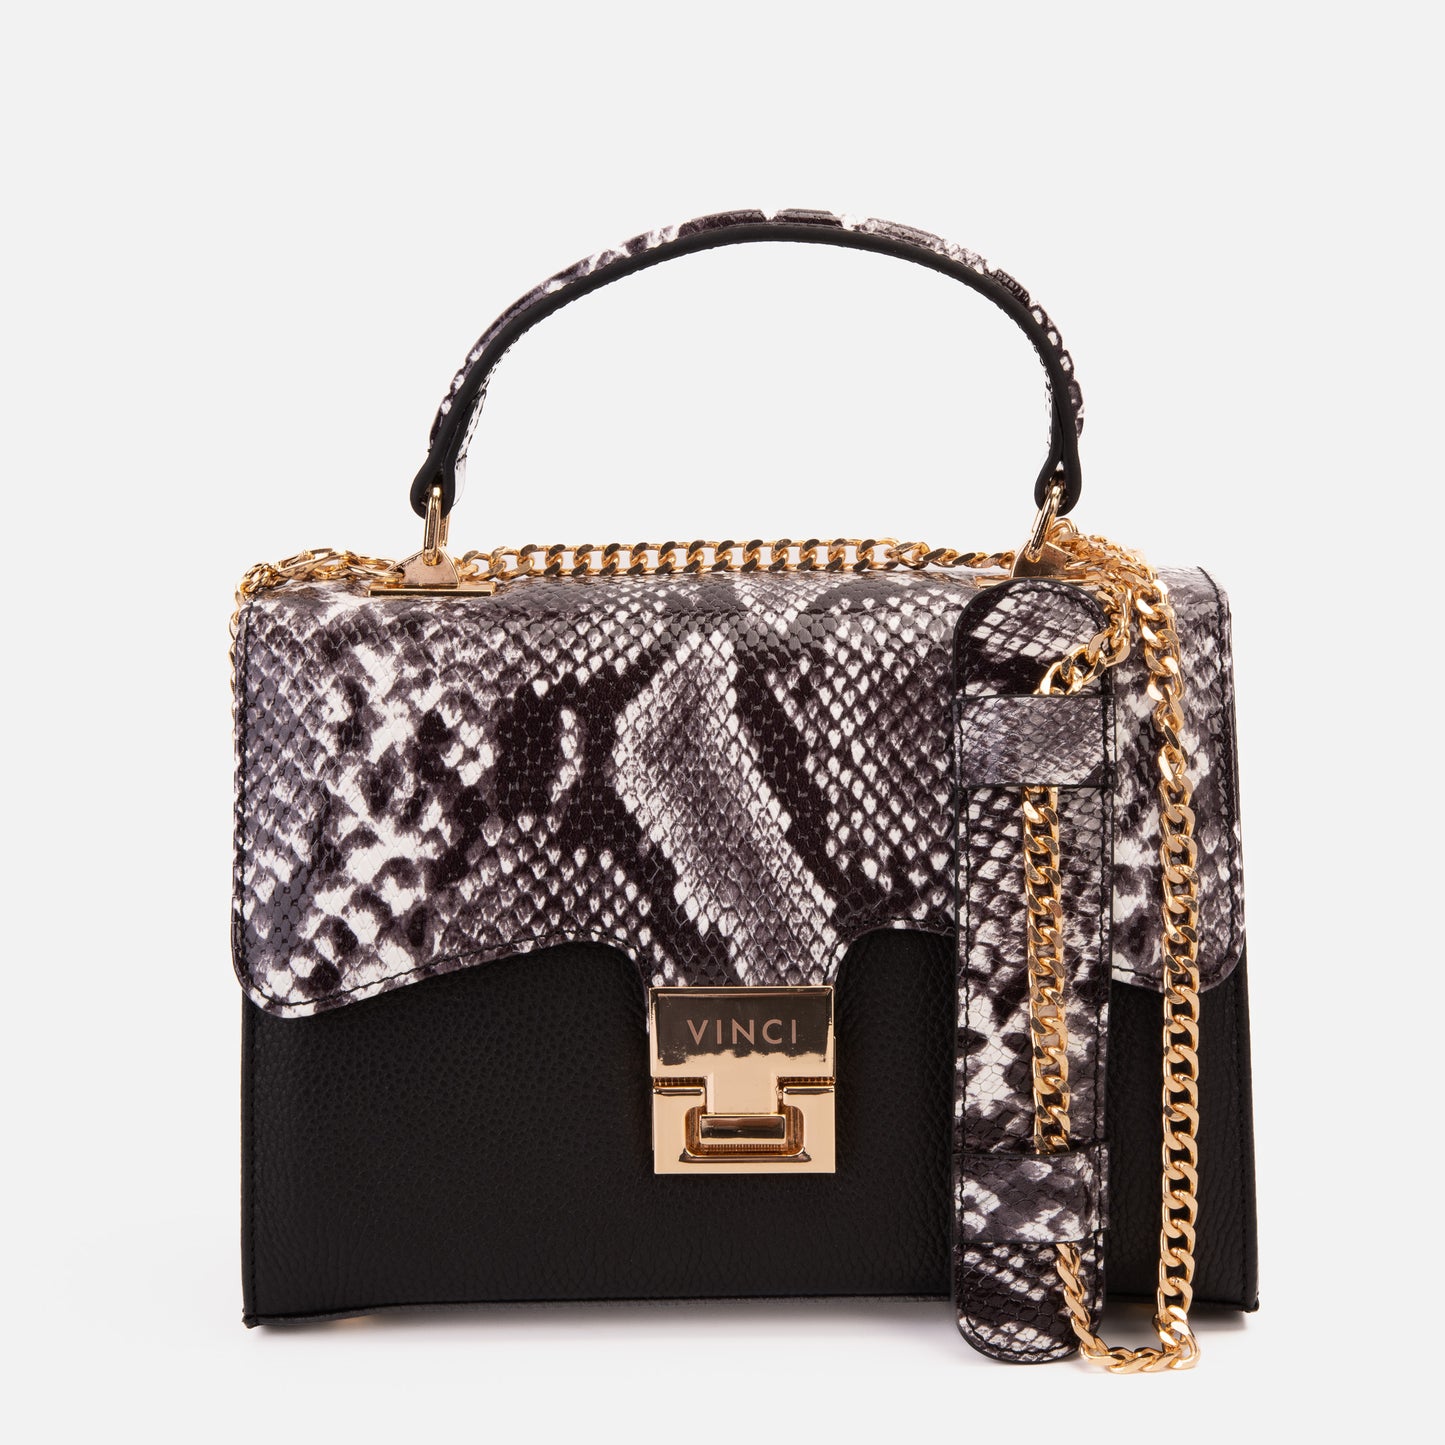 The Venezia Black Leather Handbag